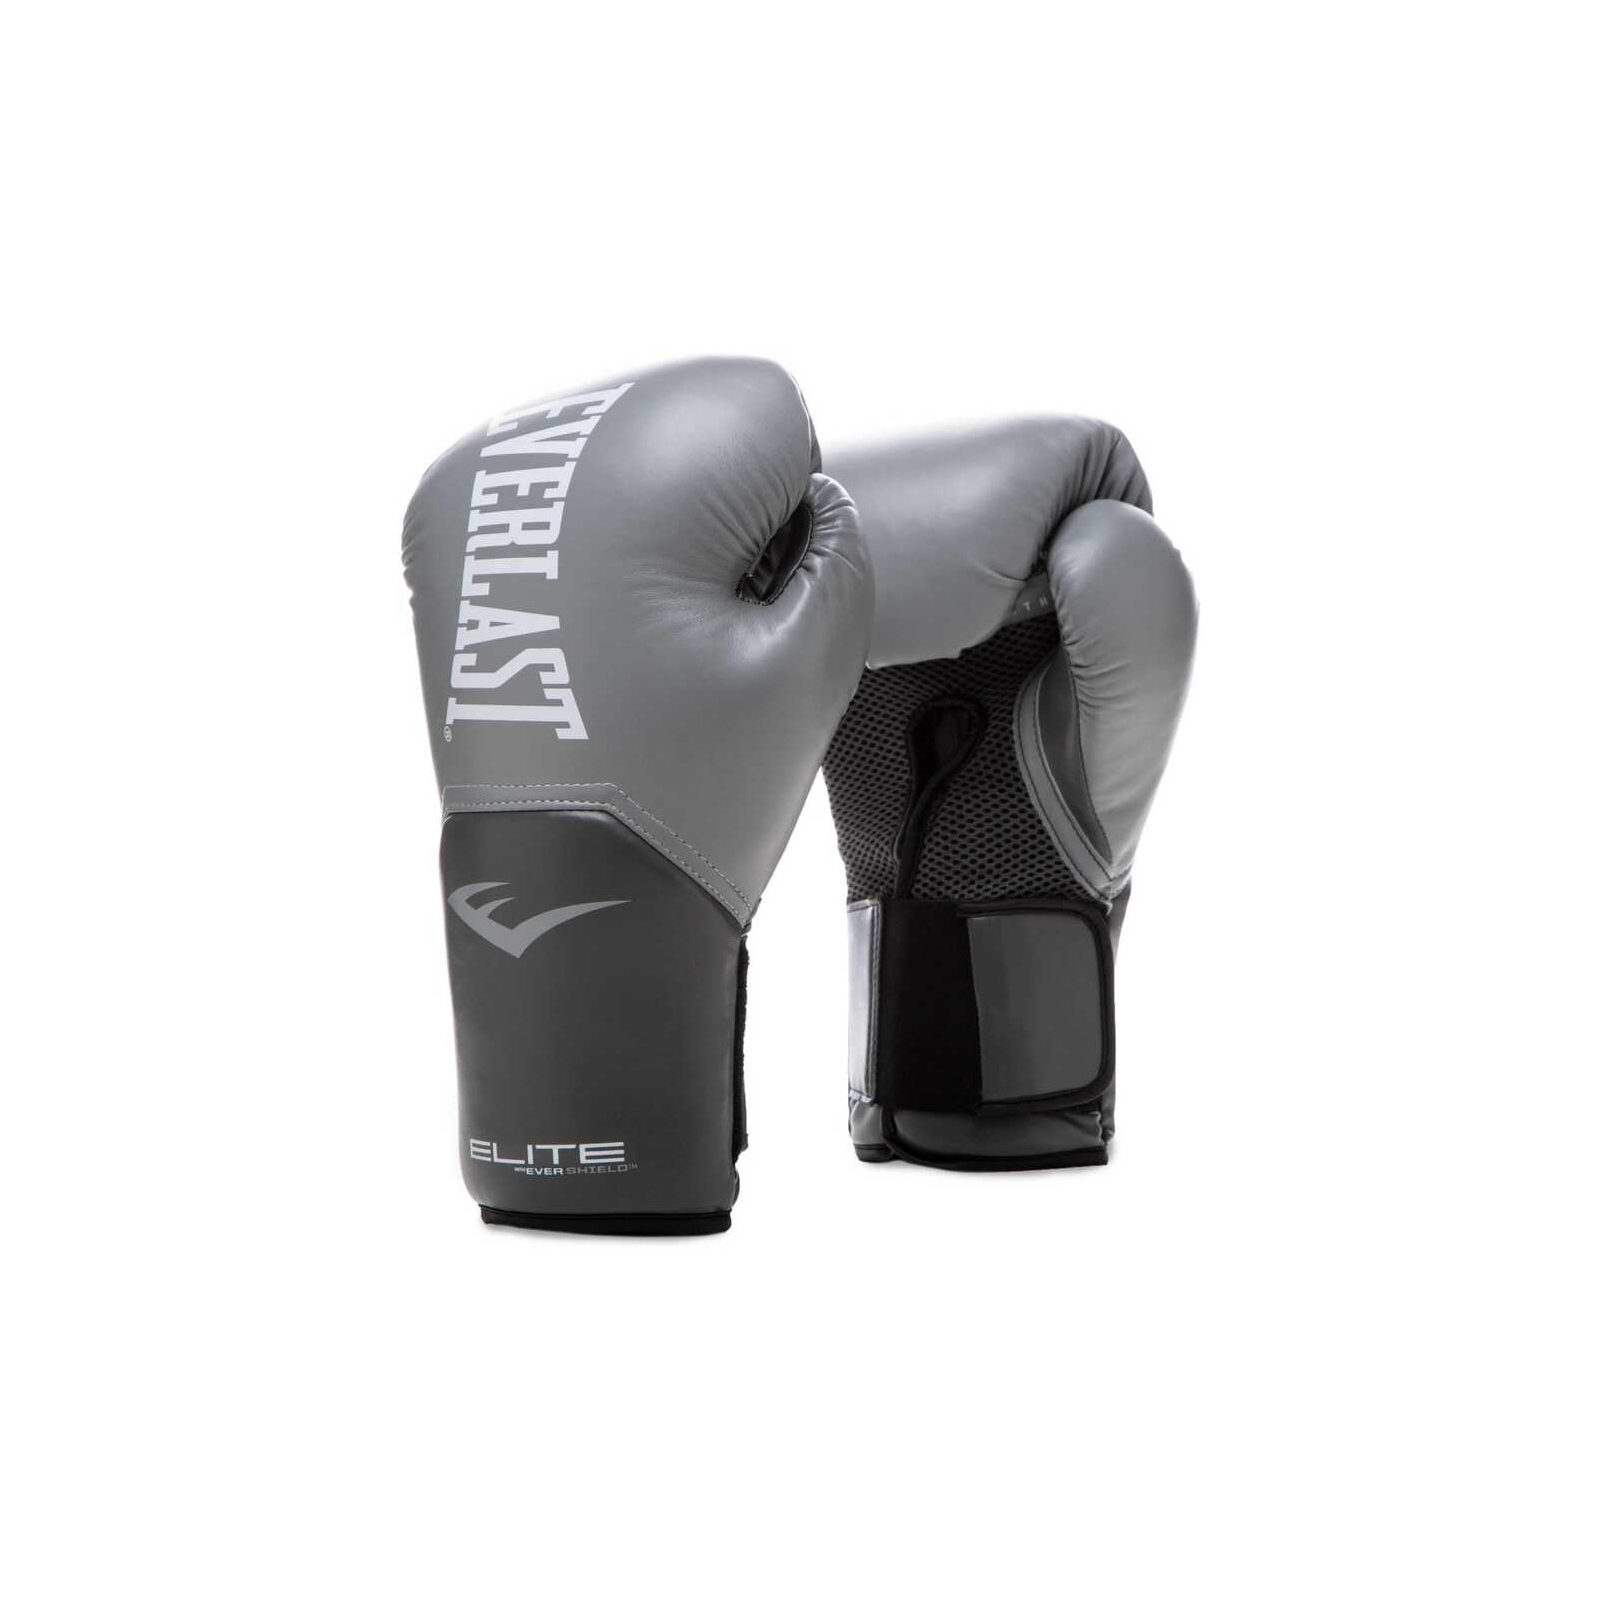 Боксерские перчатки Everlast Elite Training Gloves 870282-70-4 червоний 12 oz (009283608828)